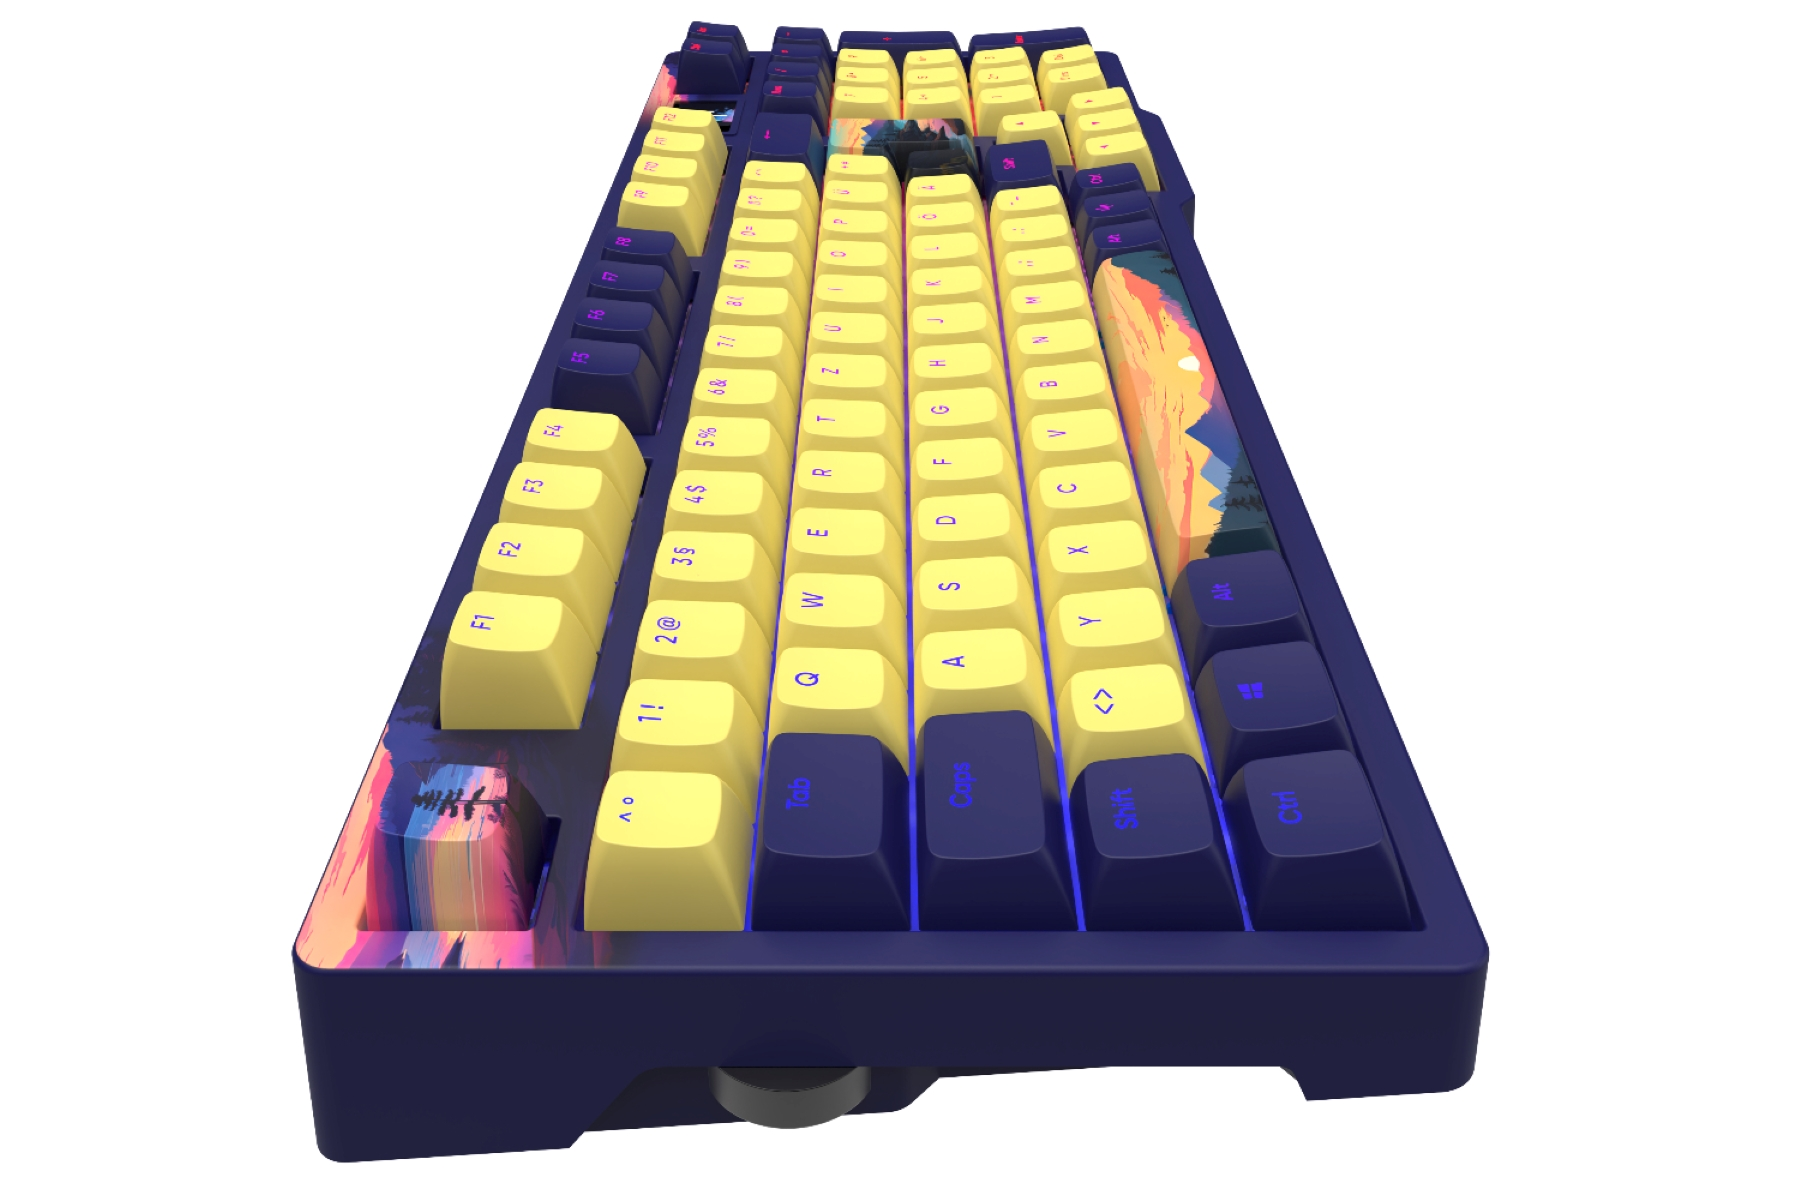 DARK PROJECT 98 Mech. (DE) Sunset Gaming Tastatur, - G3MS Mechanisch RGB [ISO